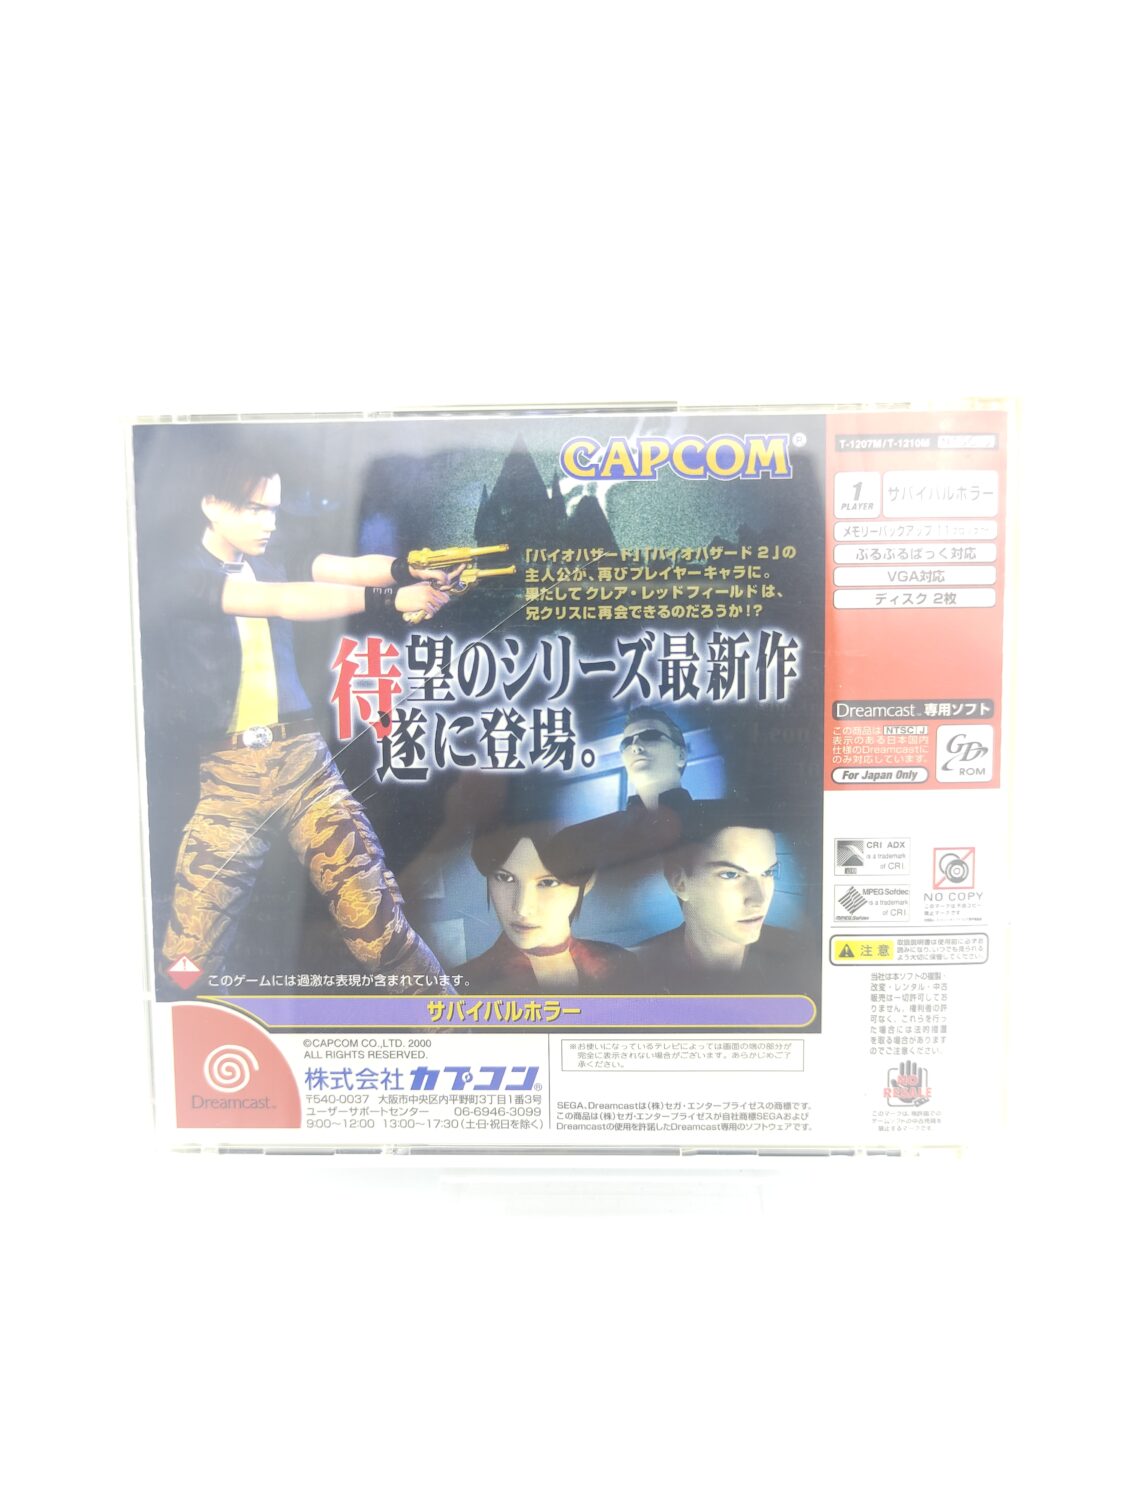 PS2 BioHazard Resident Evil Code Veronica Complete Capcom Japan